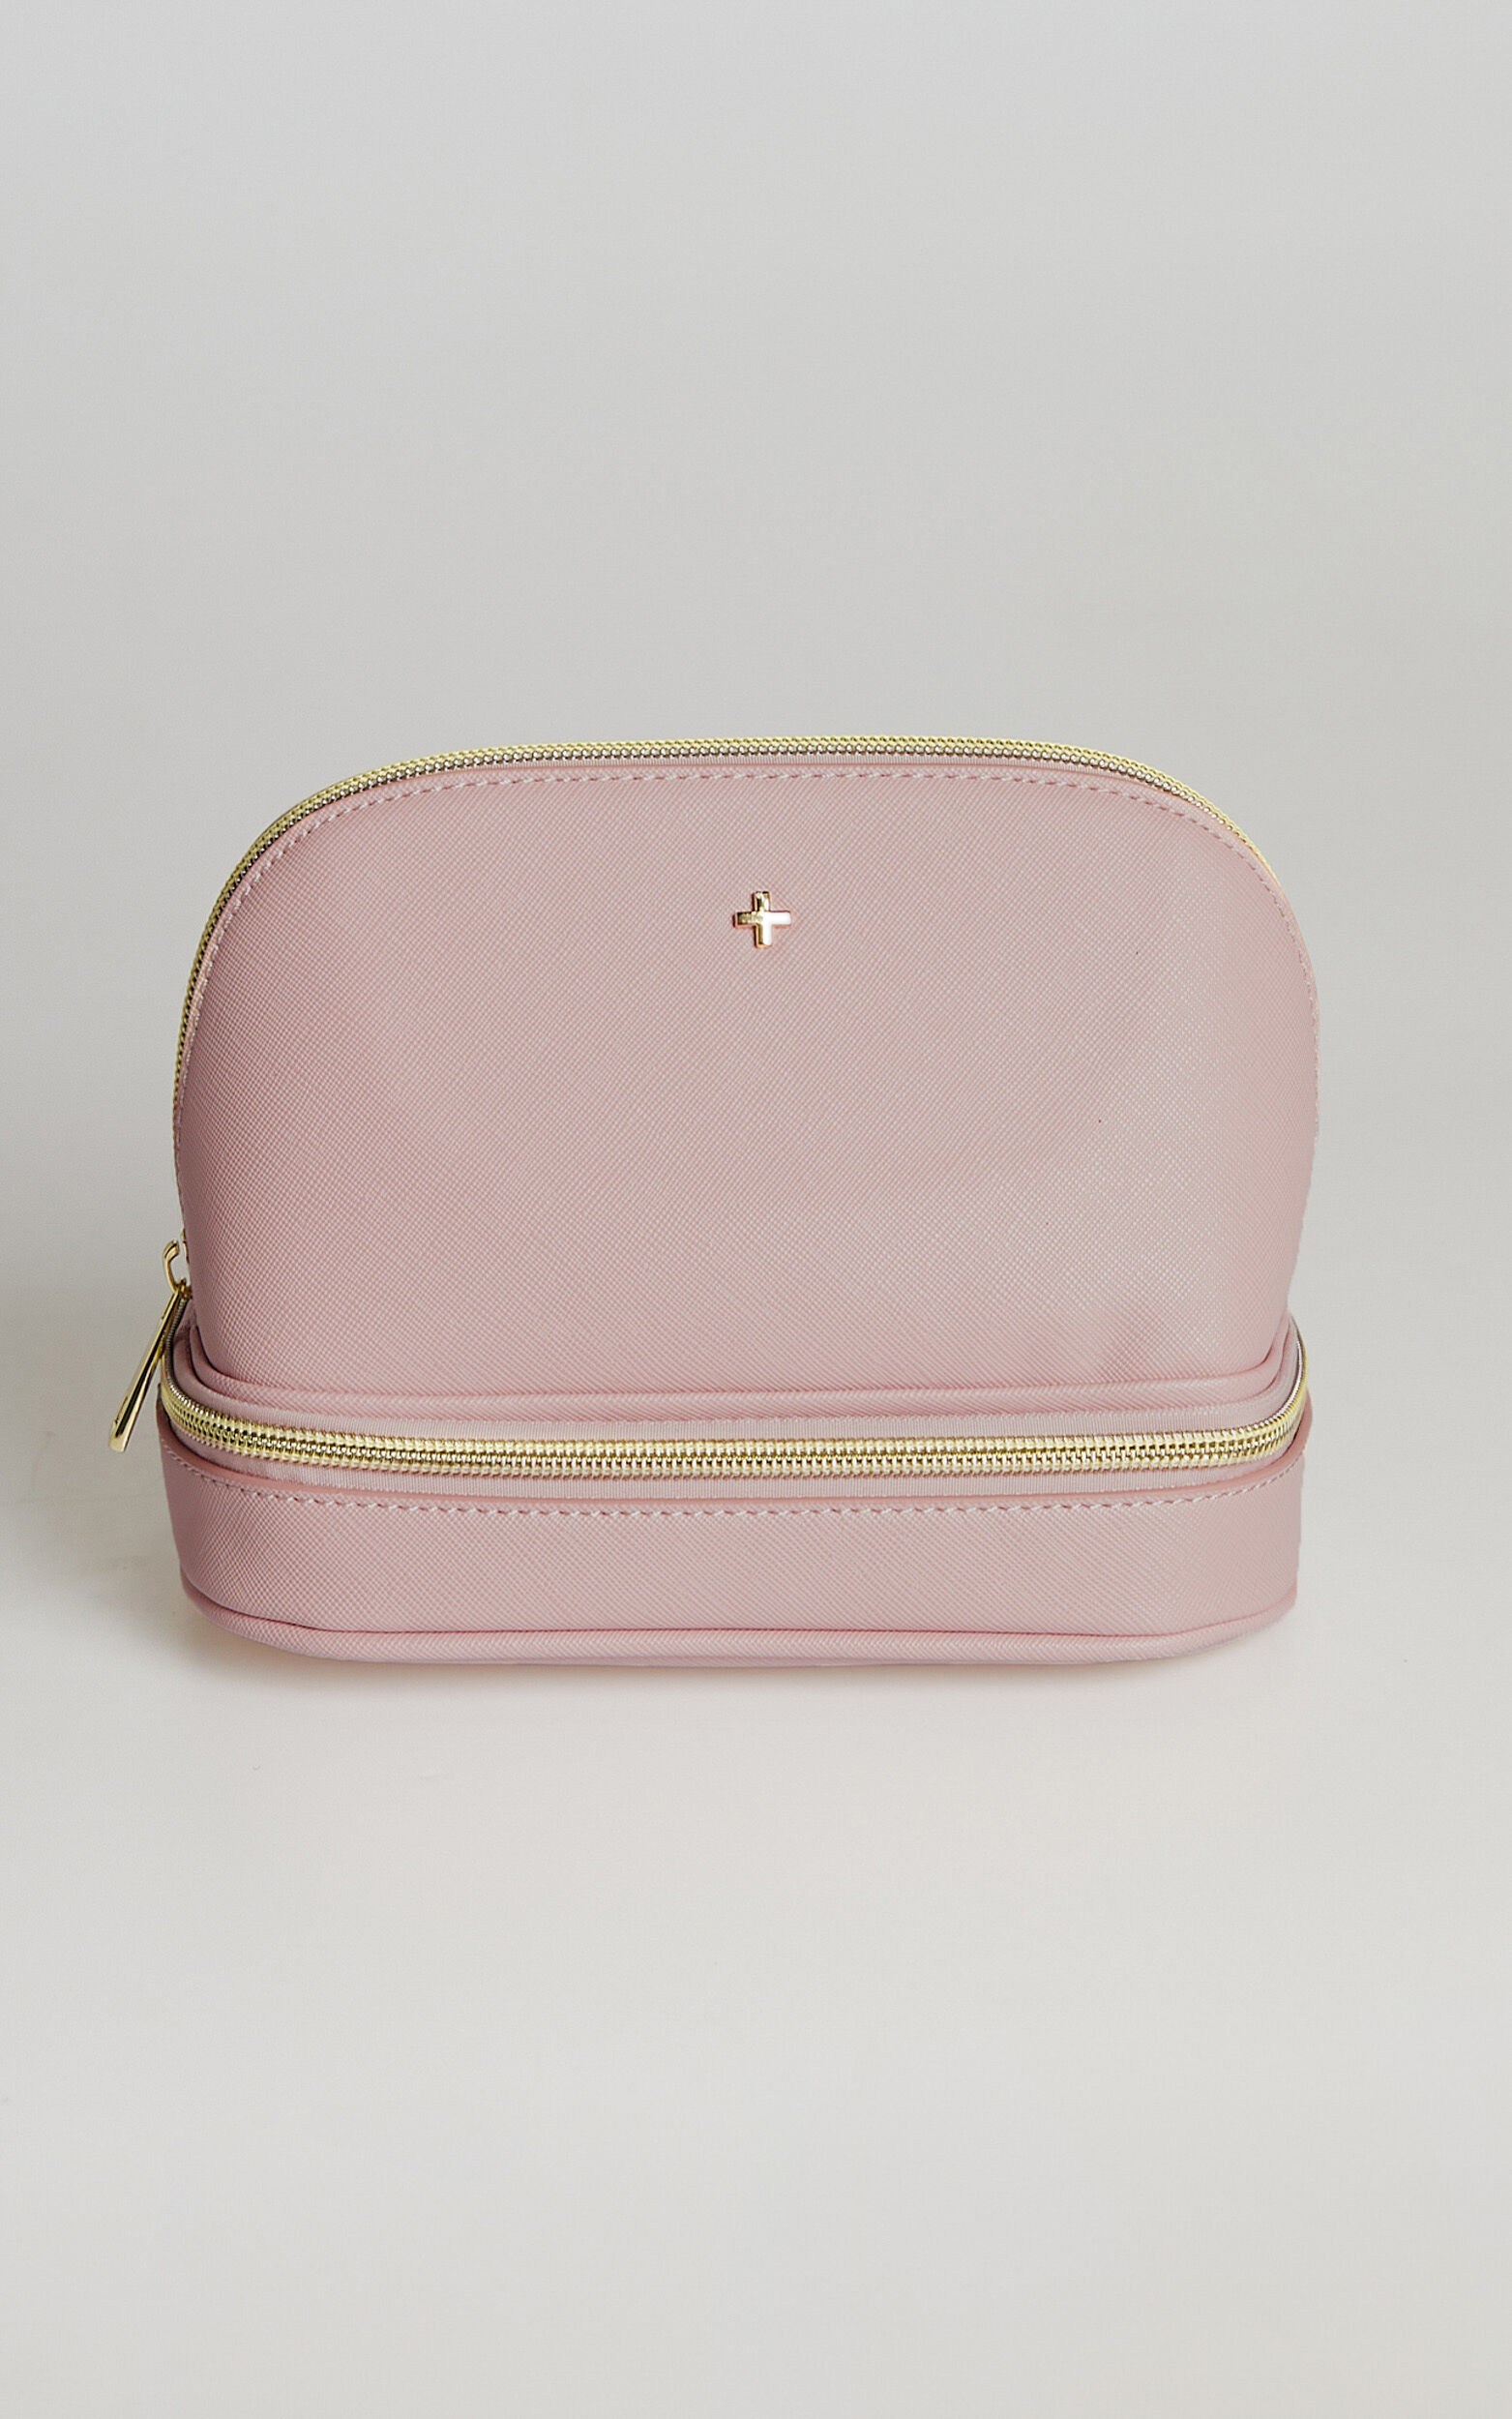 Peta and Jain - Violette Cosmetic Bag in Pink Saffiano - NoSize, PNK1